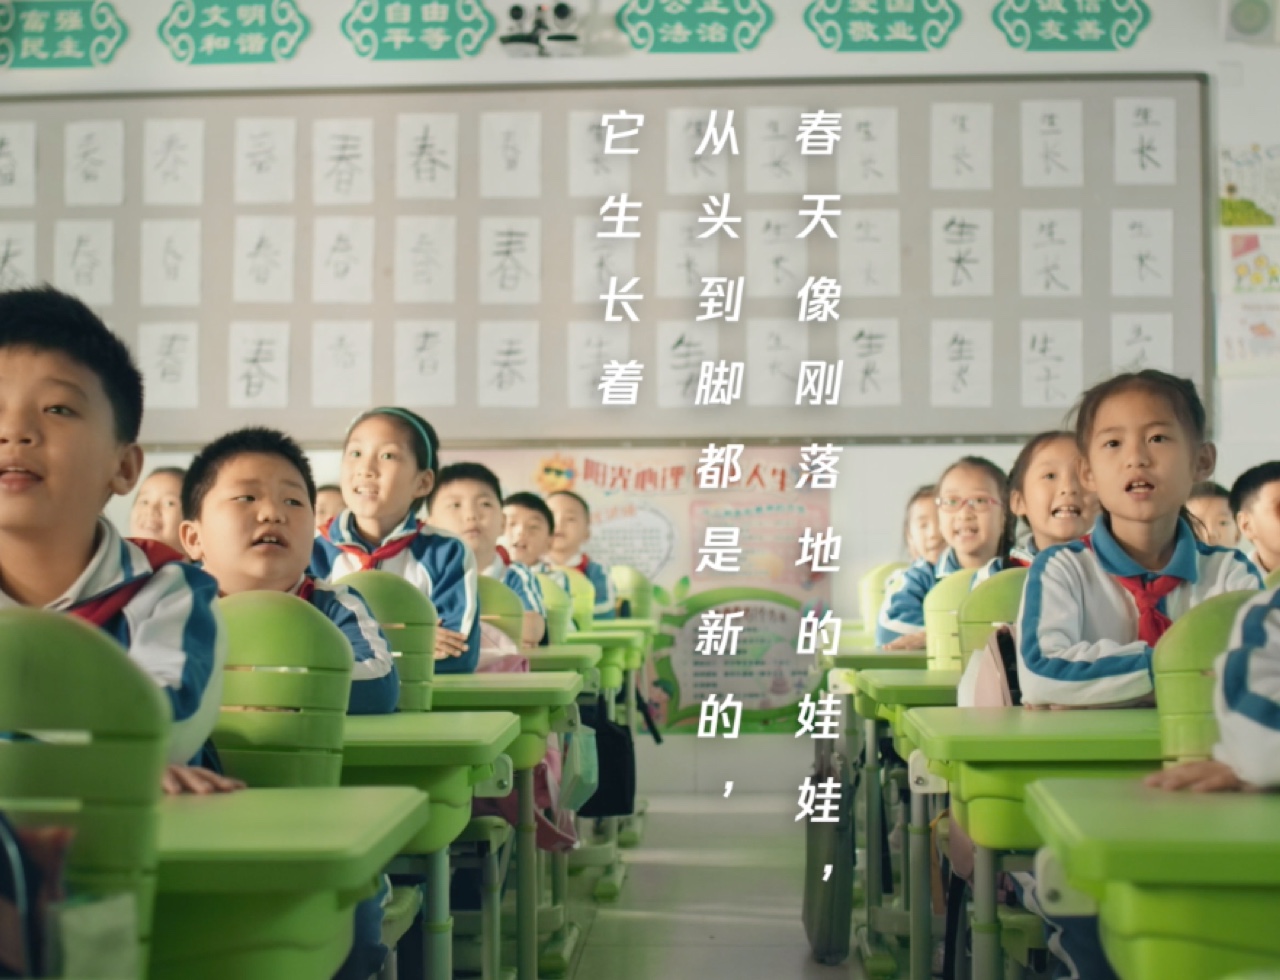 2021 Tencent MEET Education Summit Opening Film